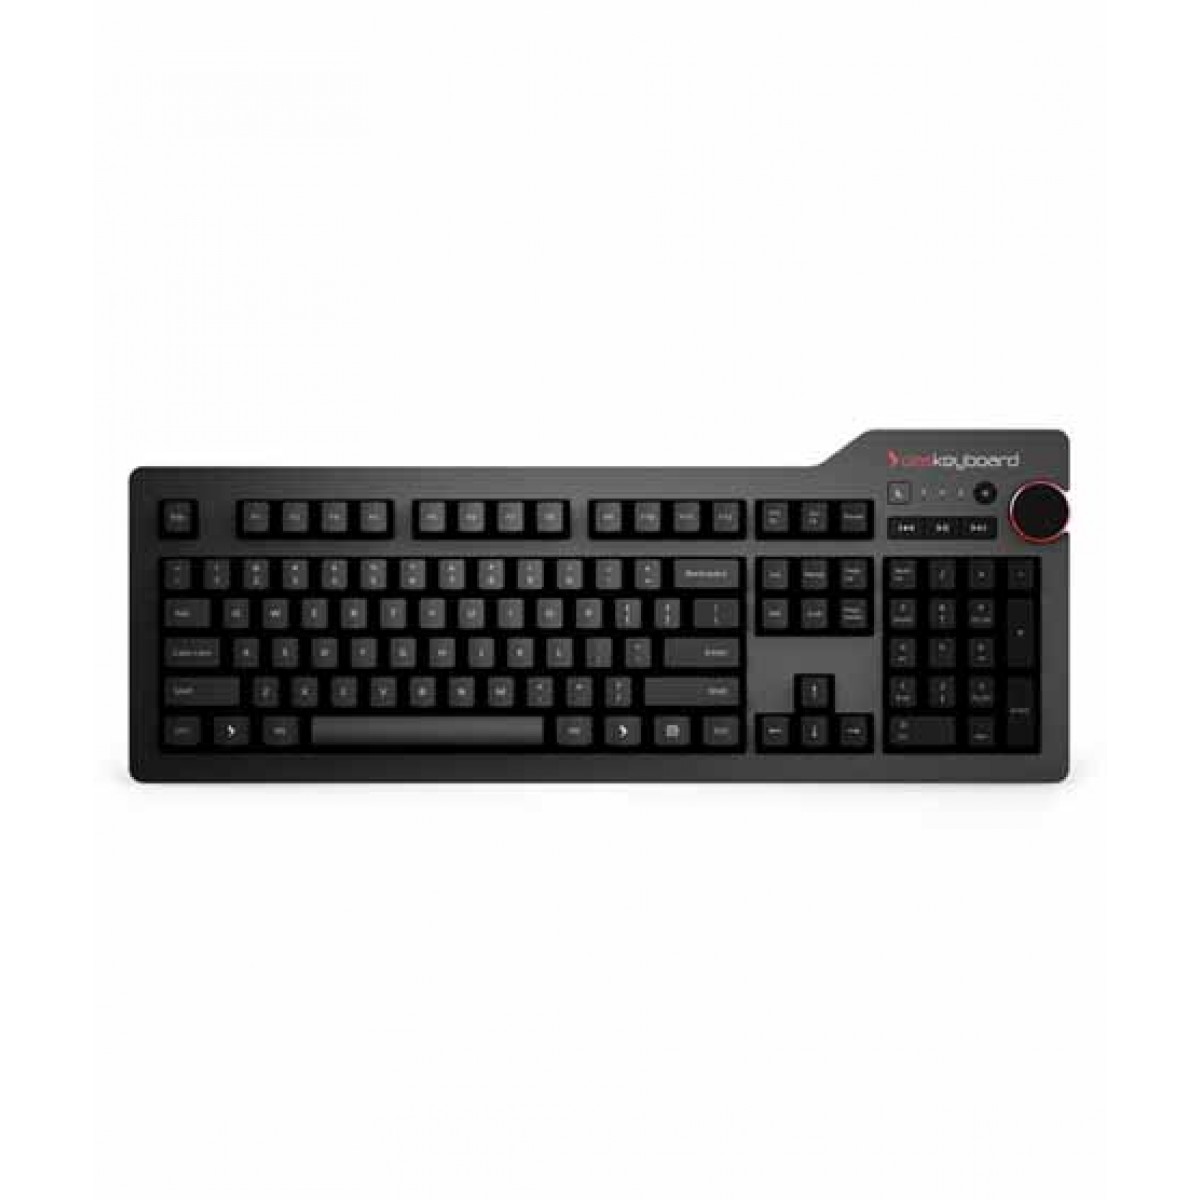 DasKeyboard 4 Professional Keyboard